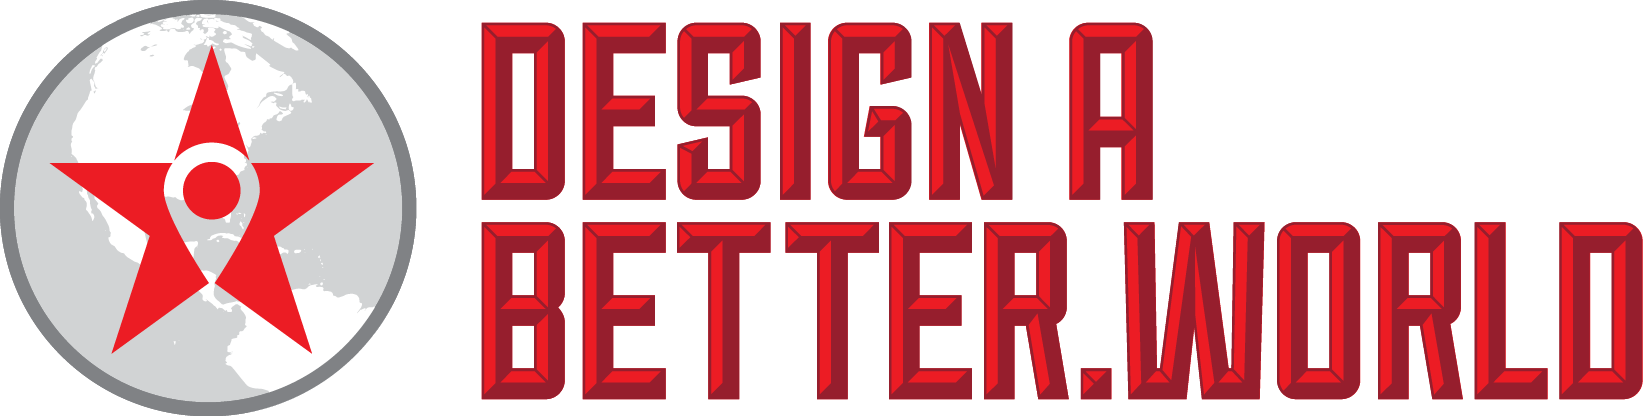 DesignABetterWorld_Logo